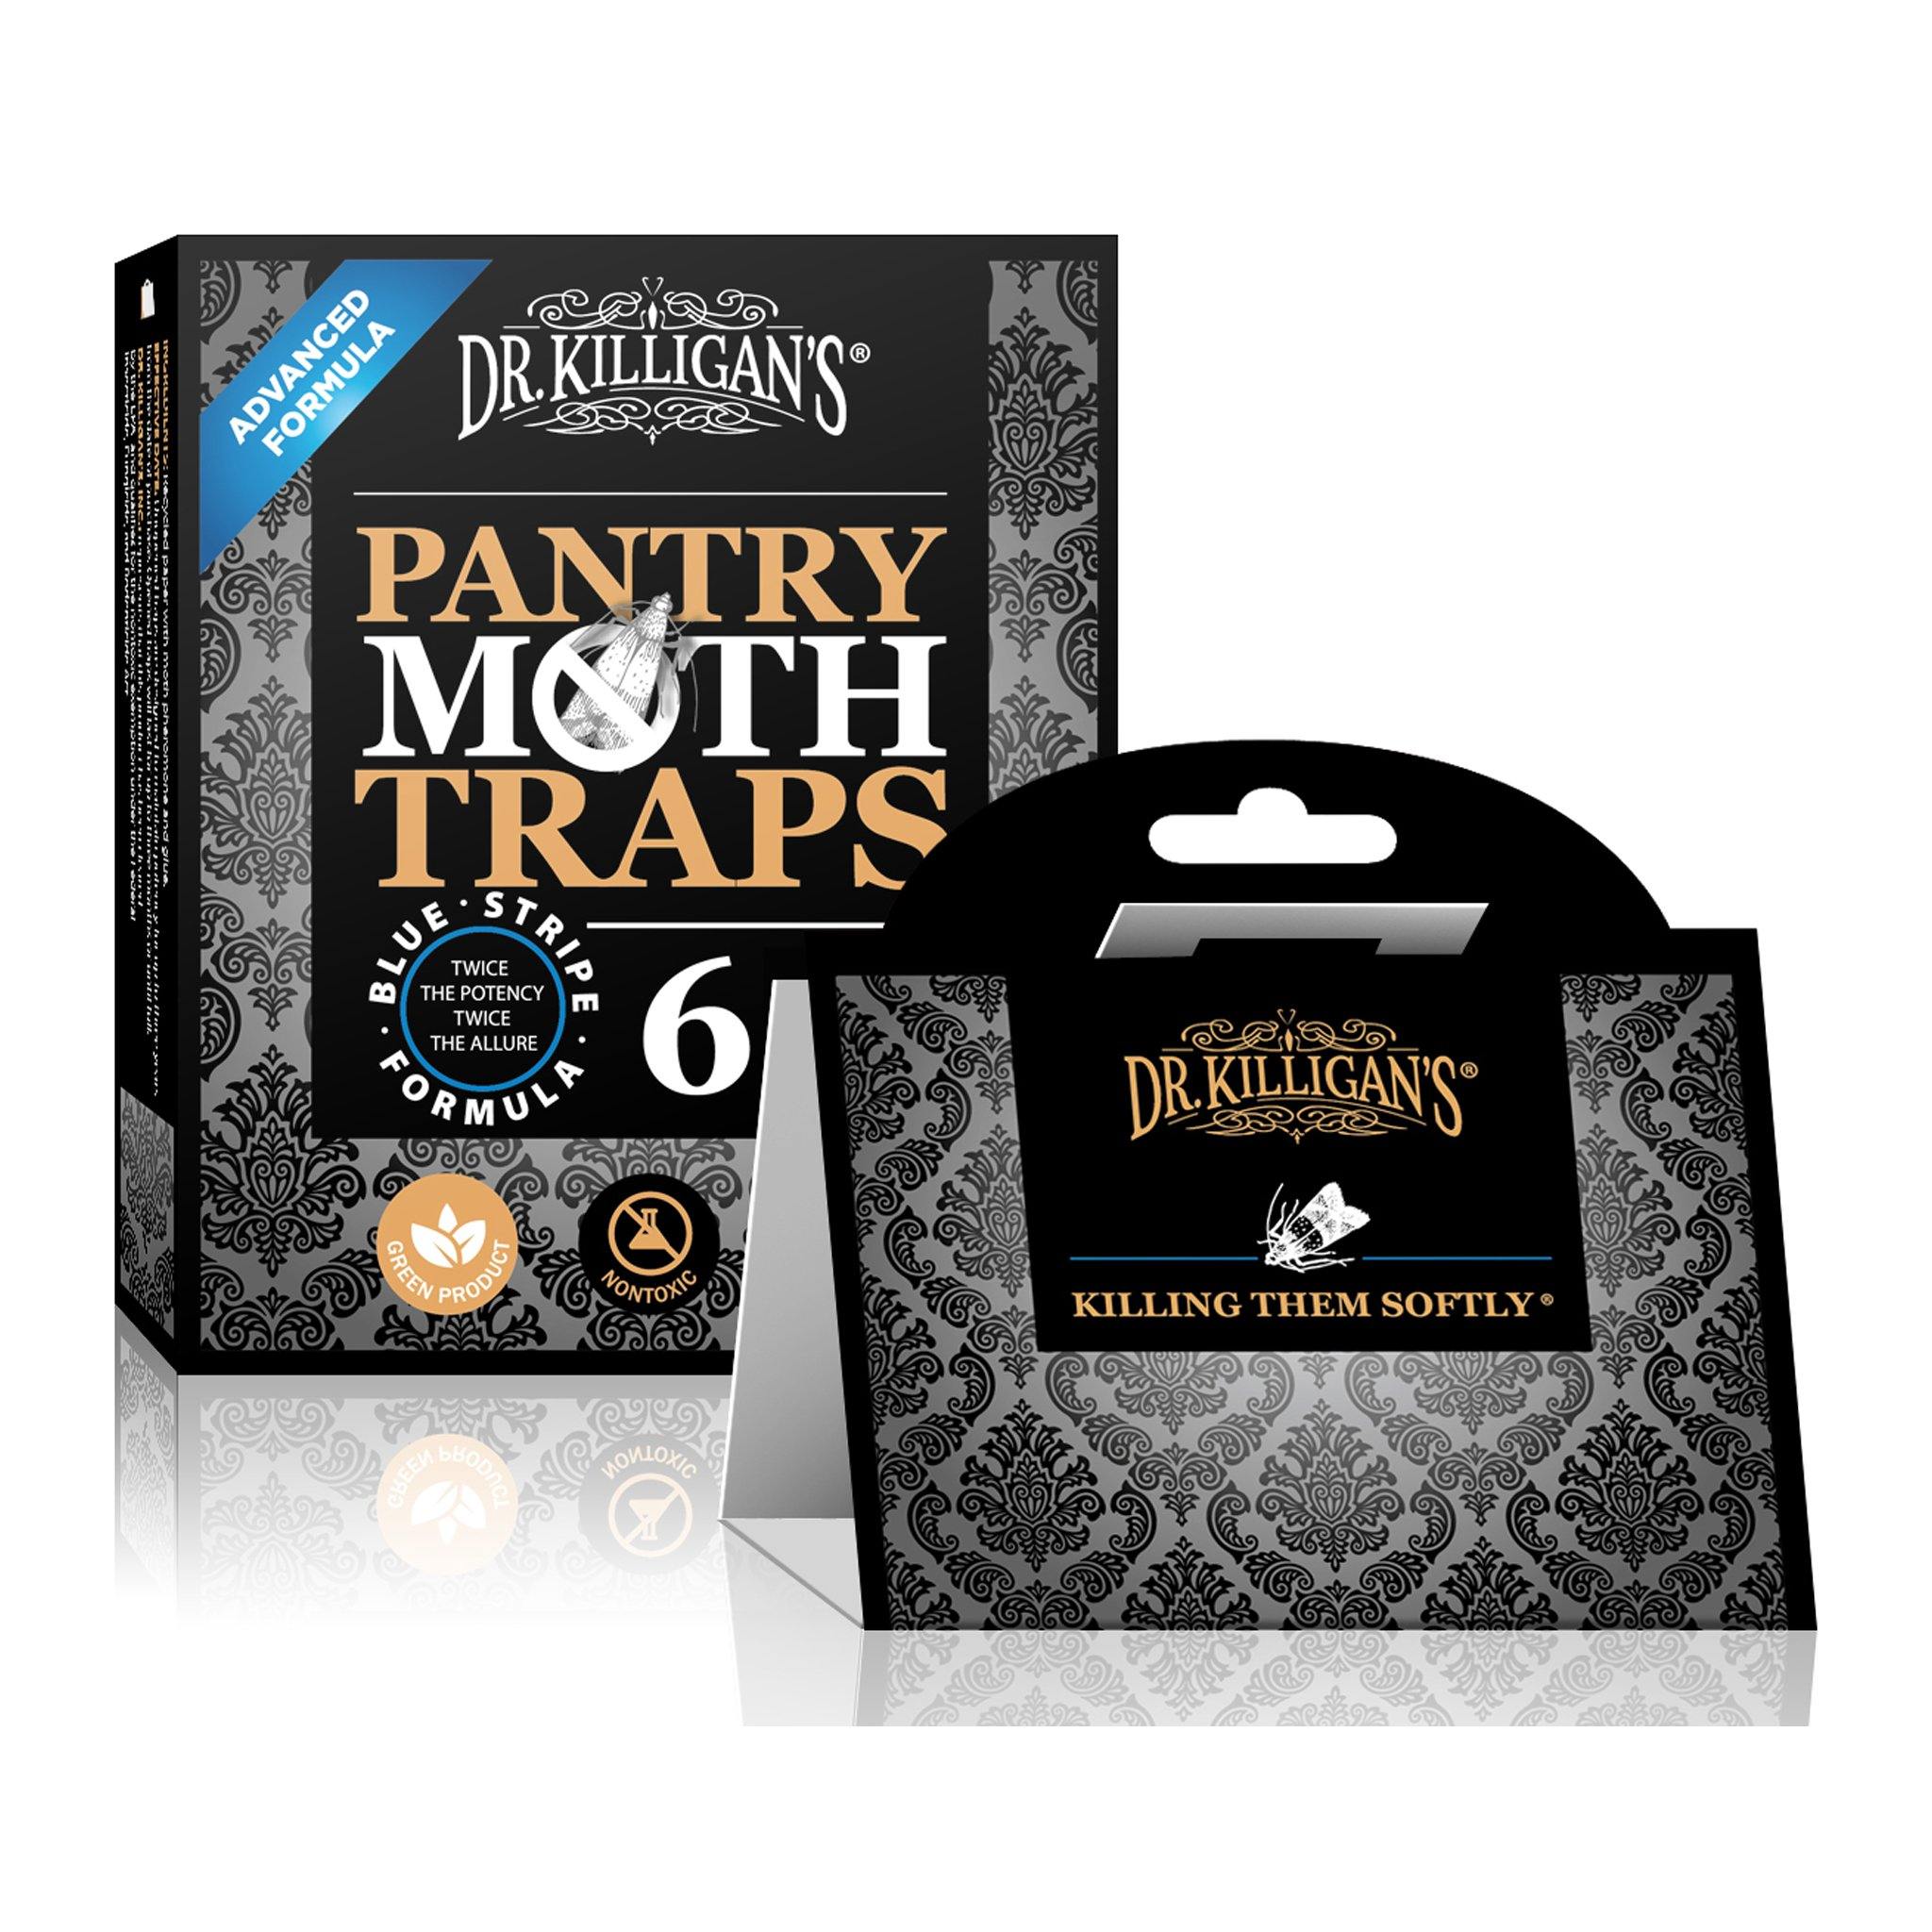 https://www.momjunction.com/wp-content/uploads/product-images/dr-killigans-premium-pantry-moth-traps_afl515.jpg